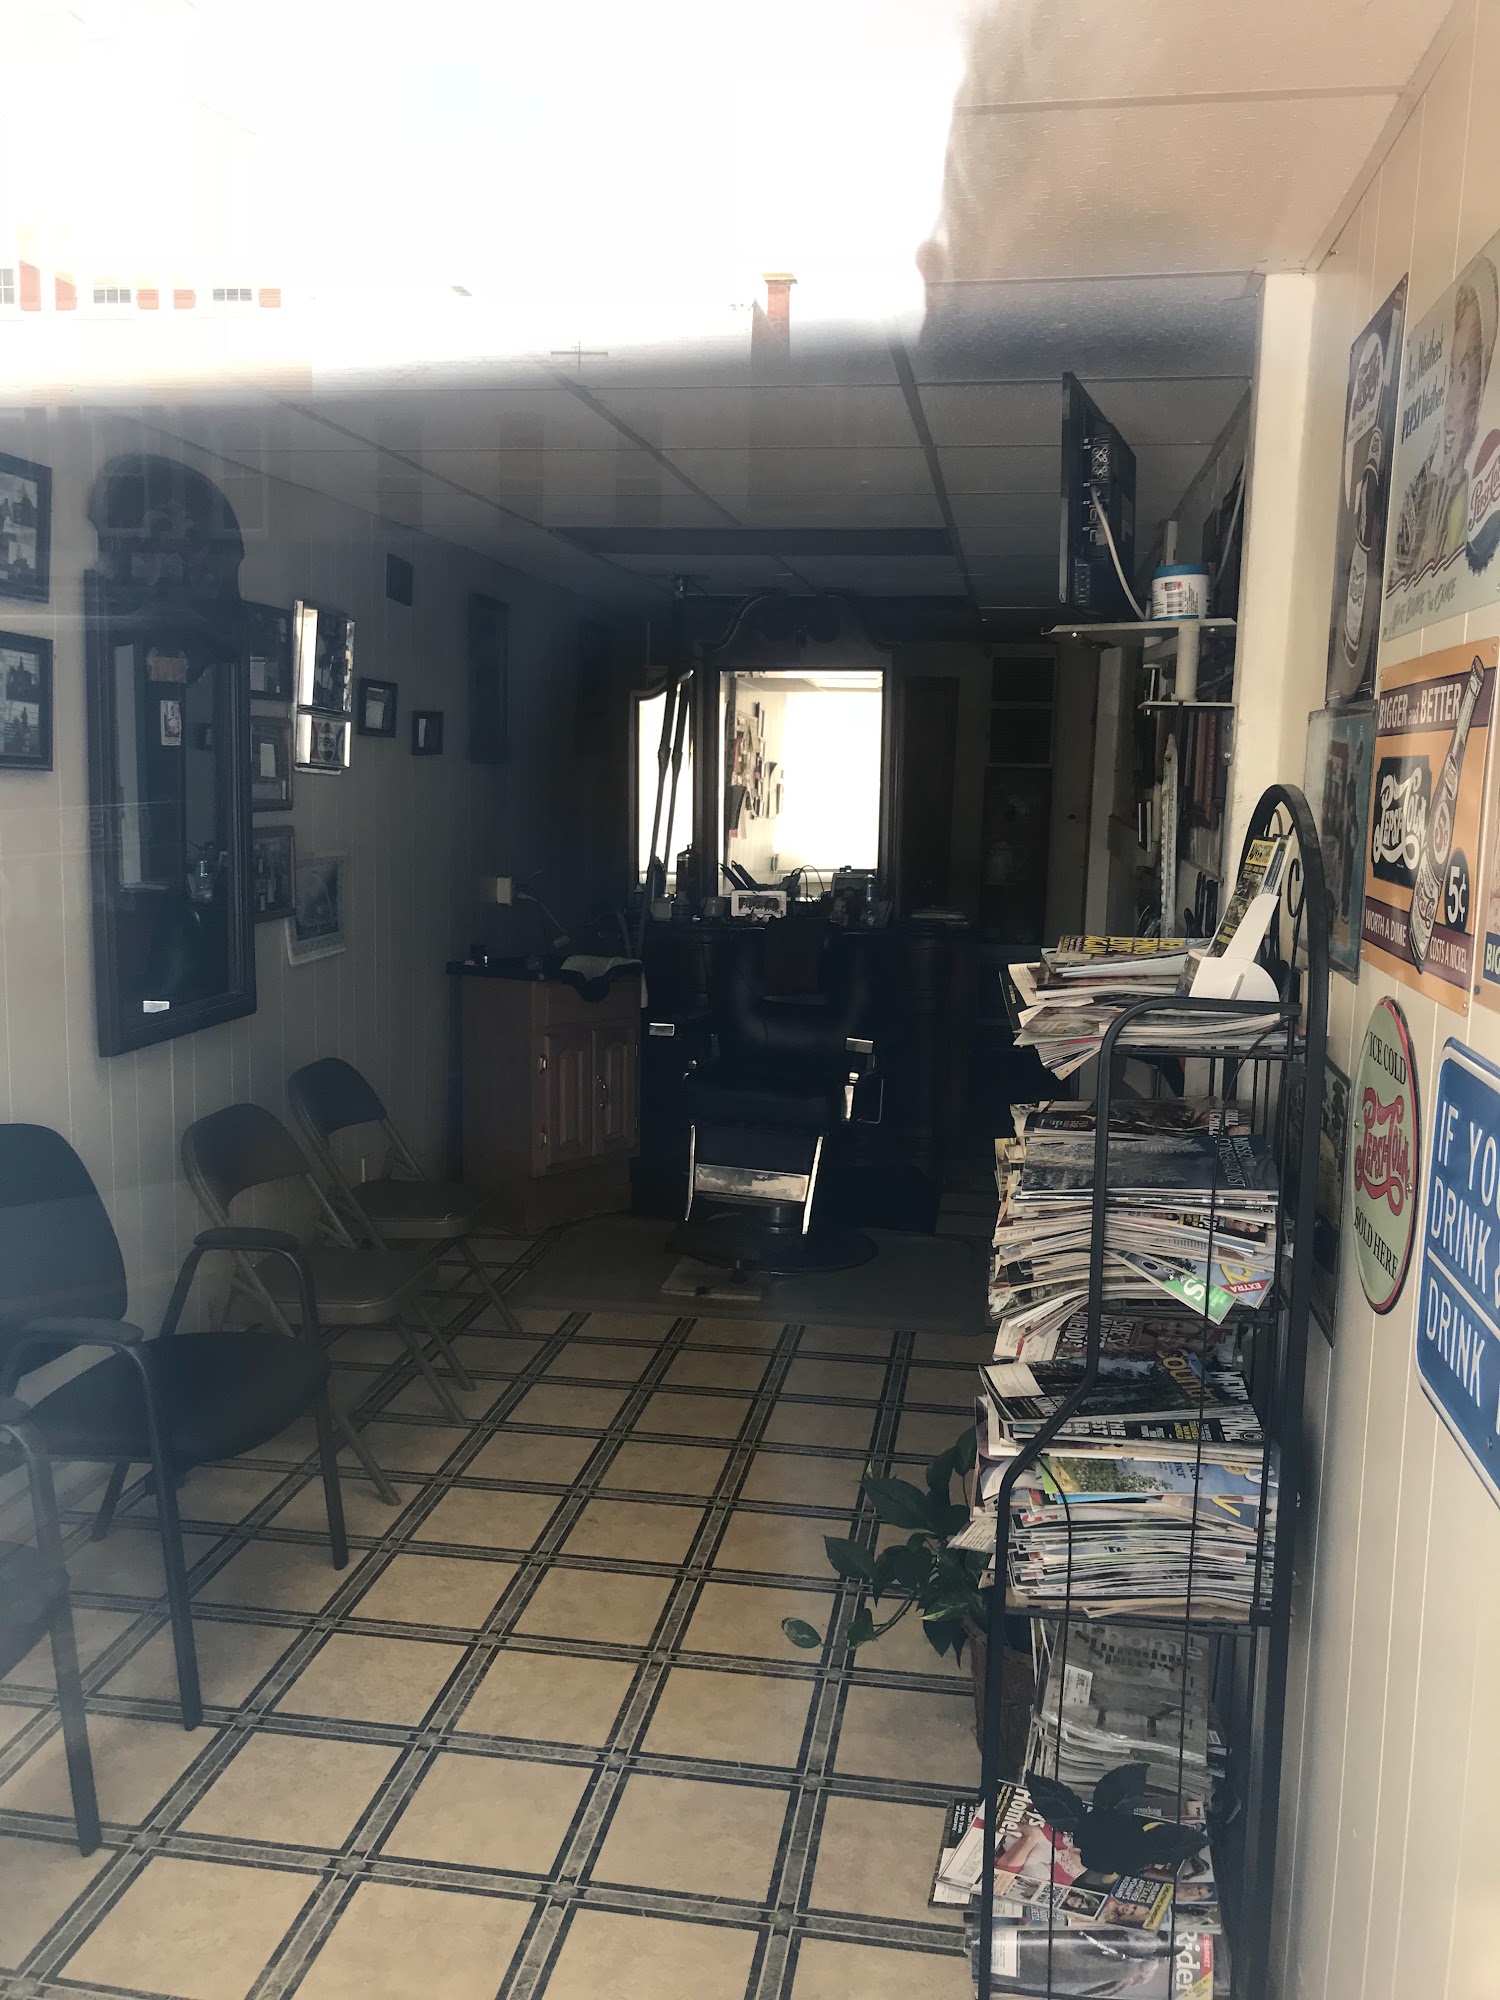 Doods Barber Shop 114 E Main St, Warrenton Missouri 63383